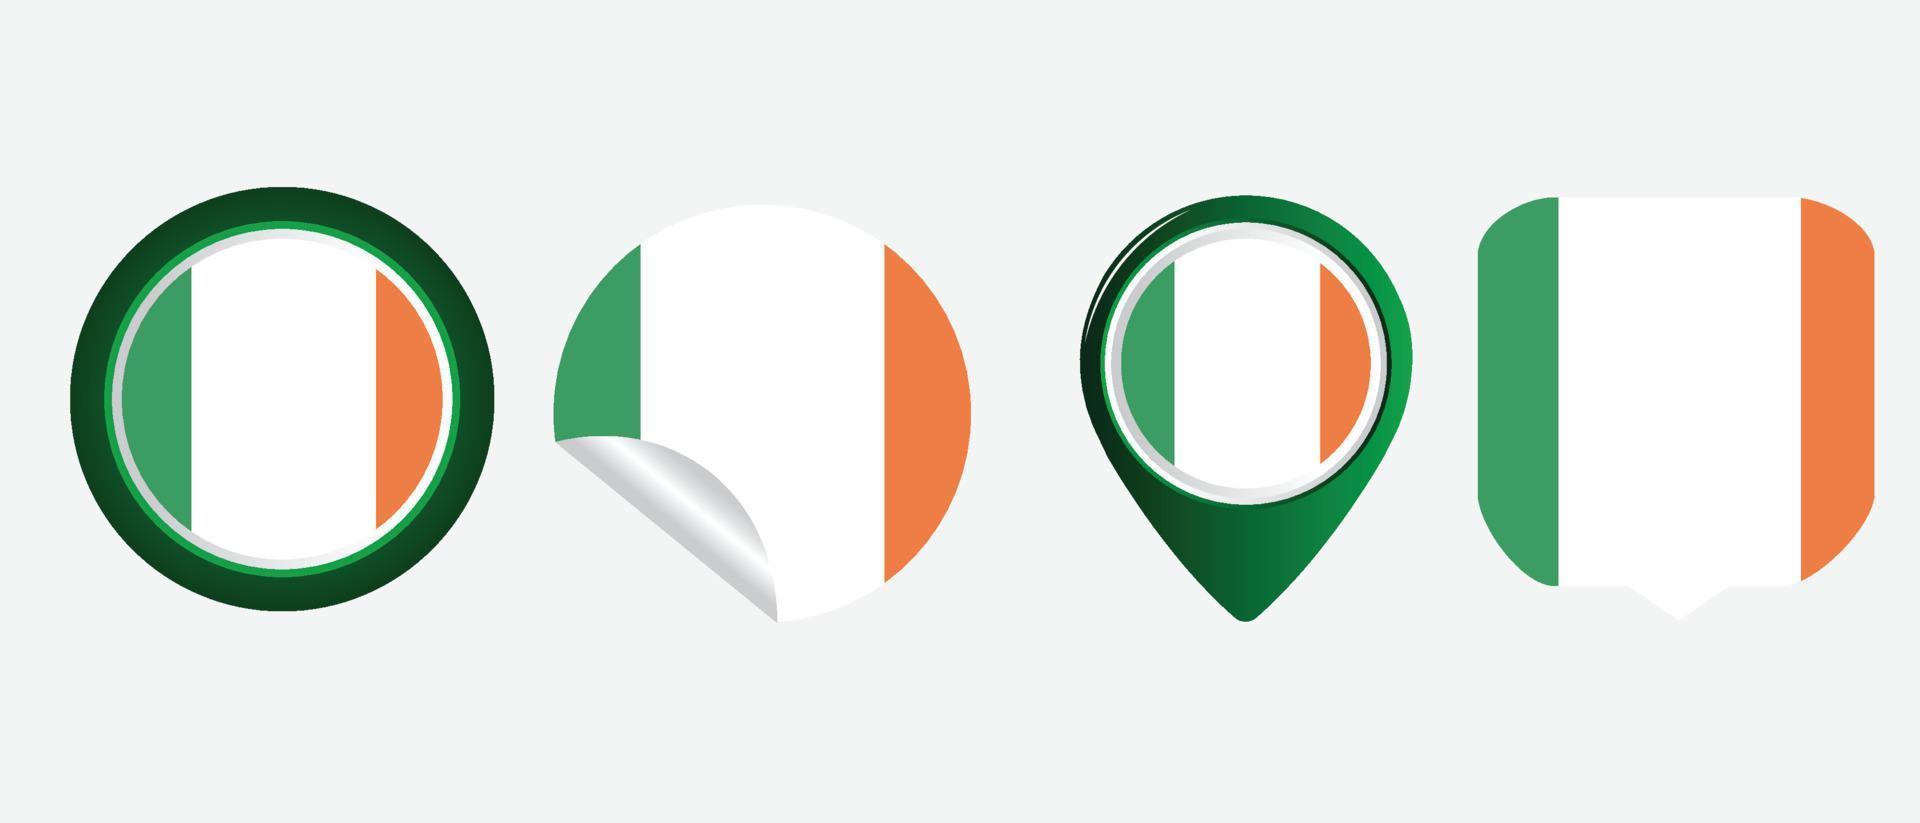 Ierse vlag. platte pictogram symbool vectorillustratie vector